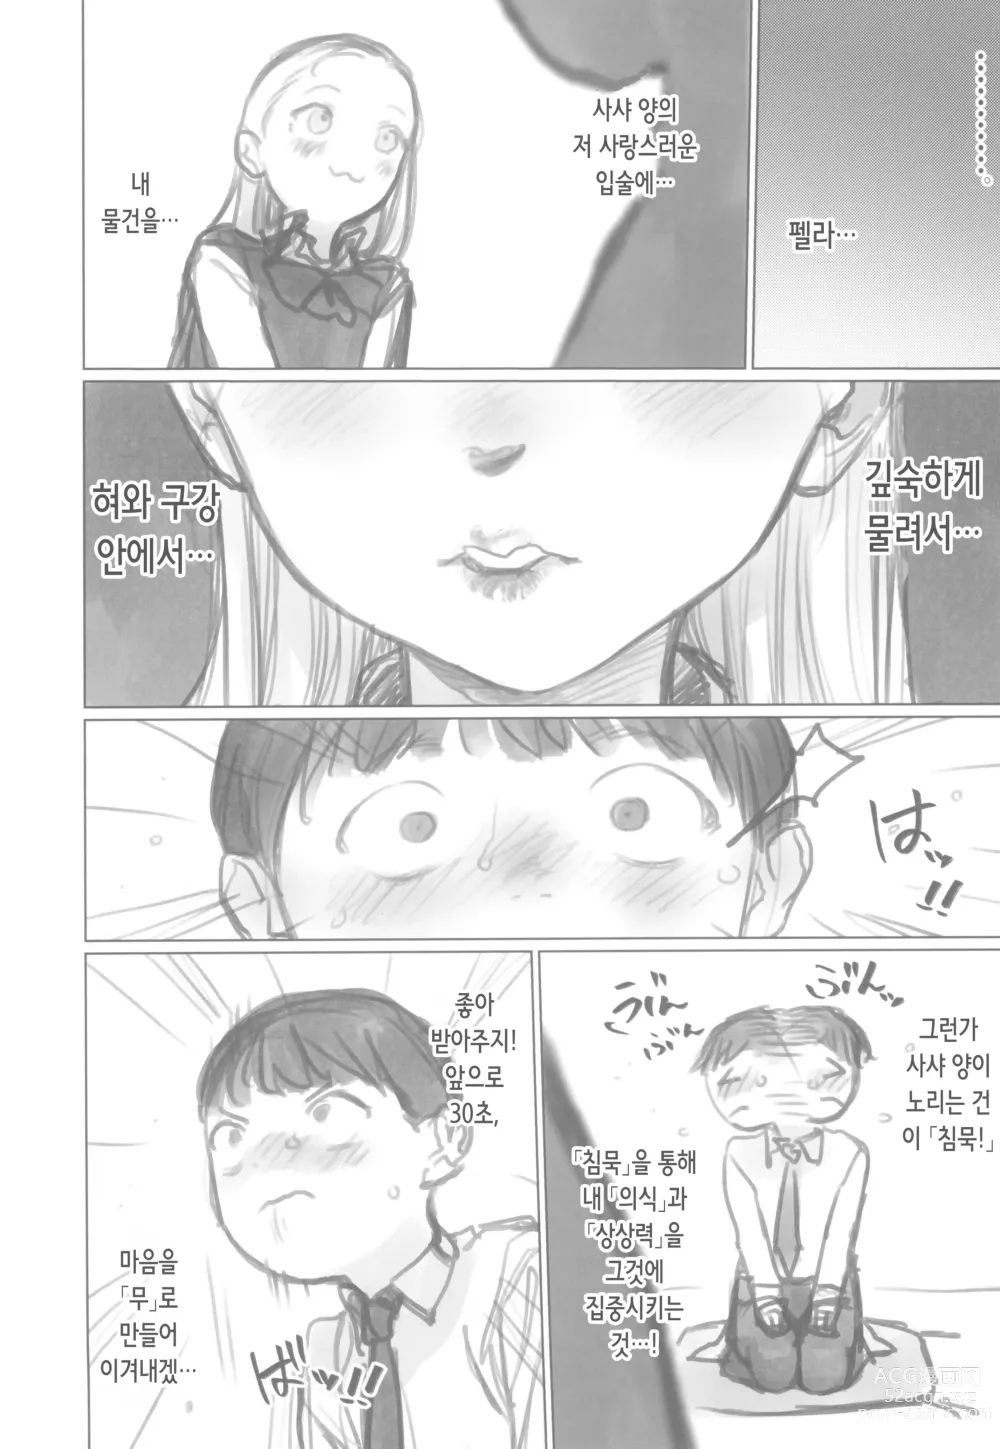 Page 9 of doujinshi 